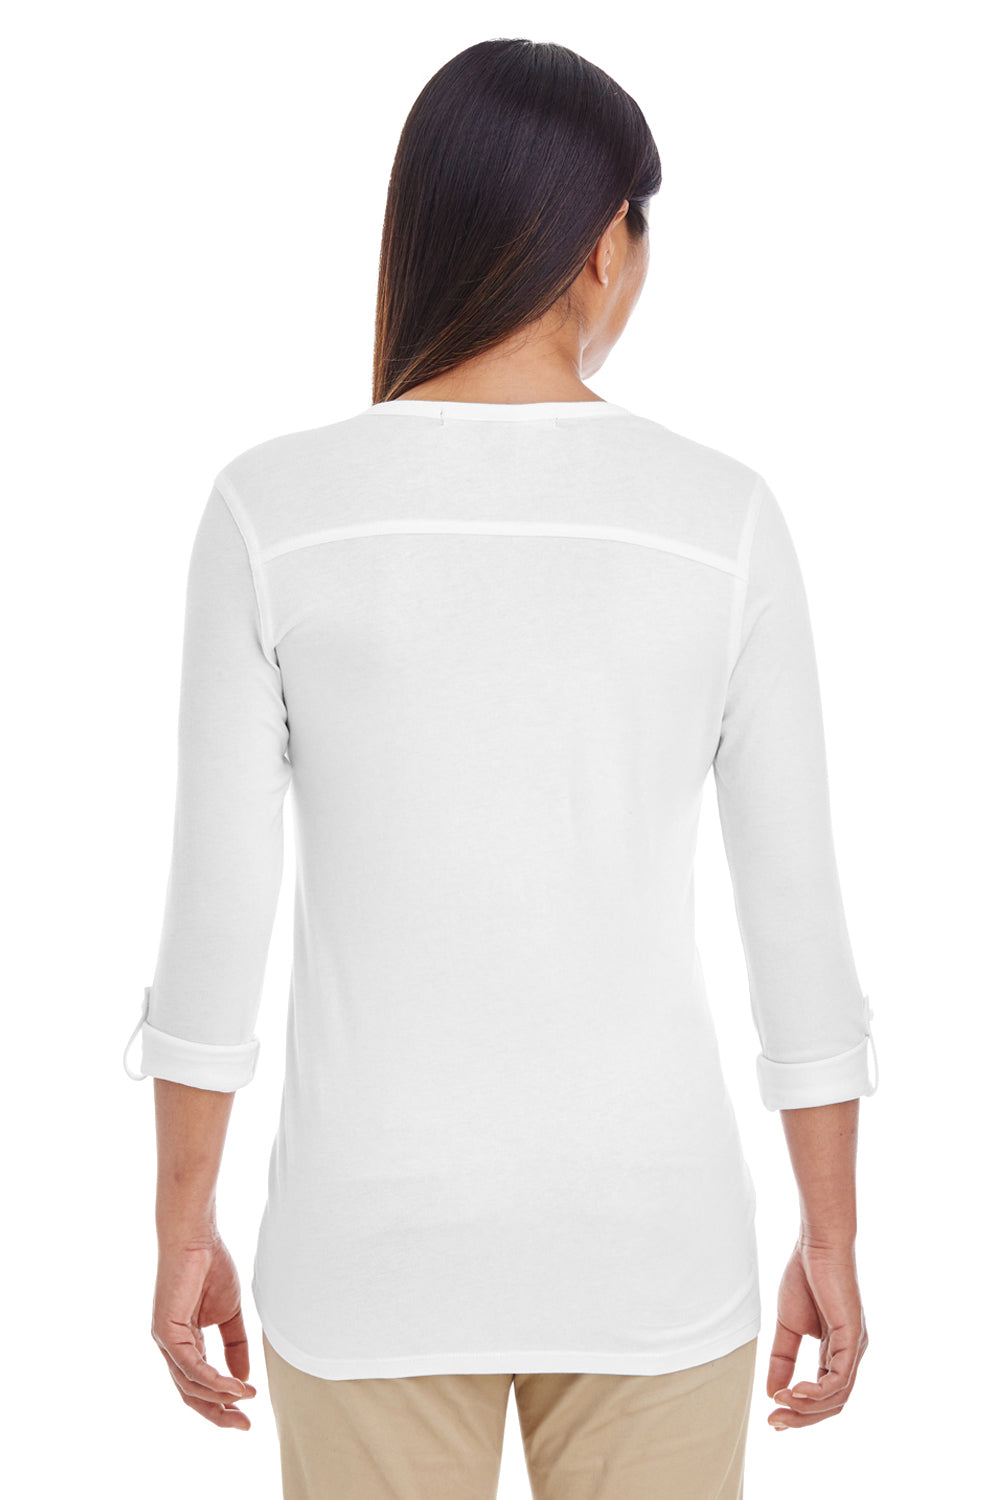 Devon & Jones DP186W Womens Perfect Fit Long Sleeve V-Neck T-Shirt White Back